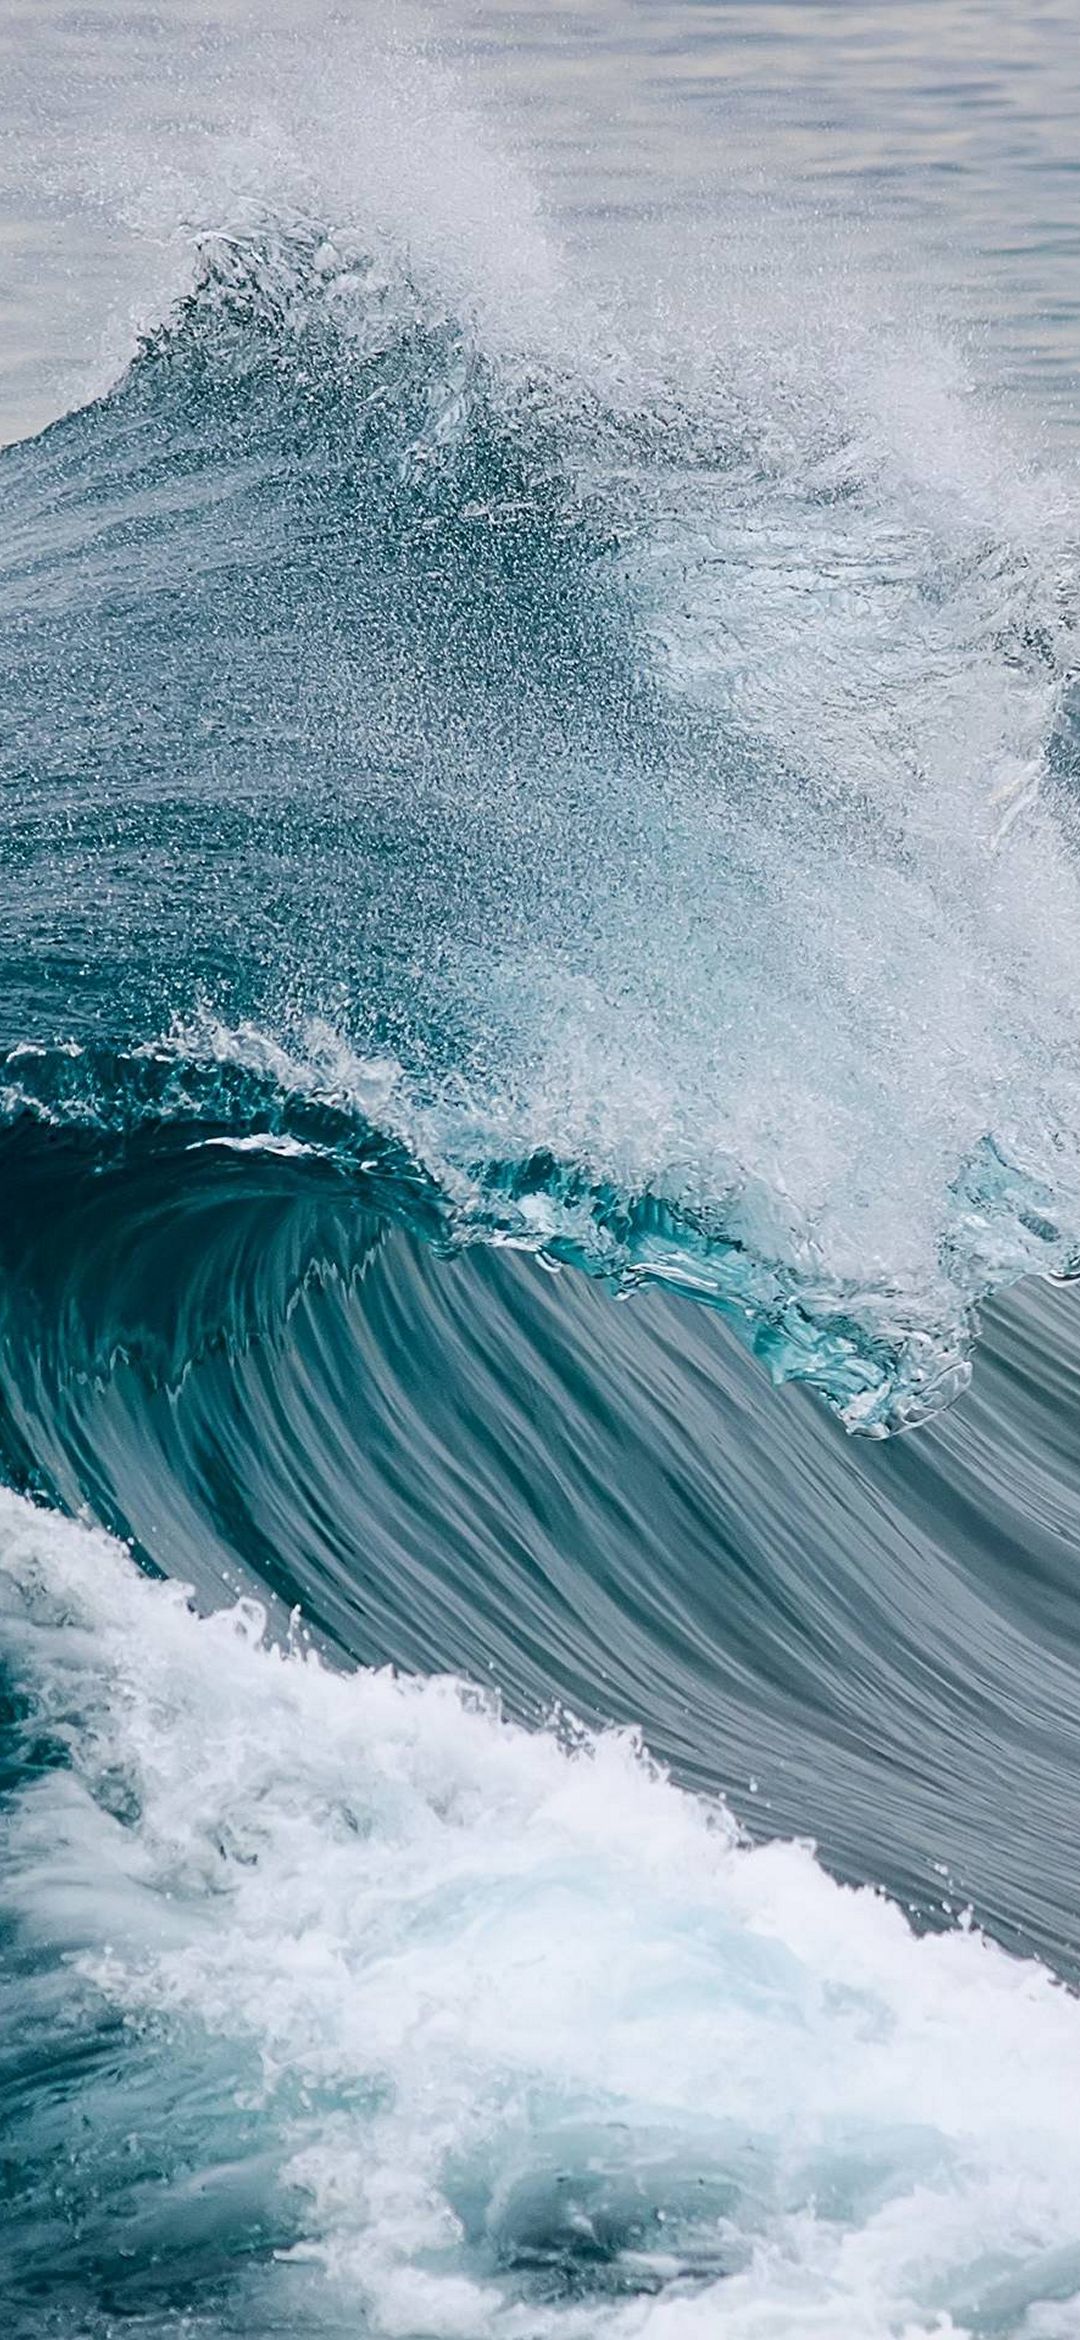 Waves Wallpaper Pictures  Download Free Images on Unsplash